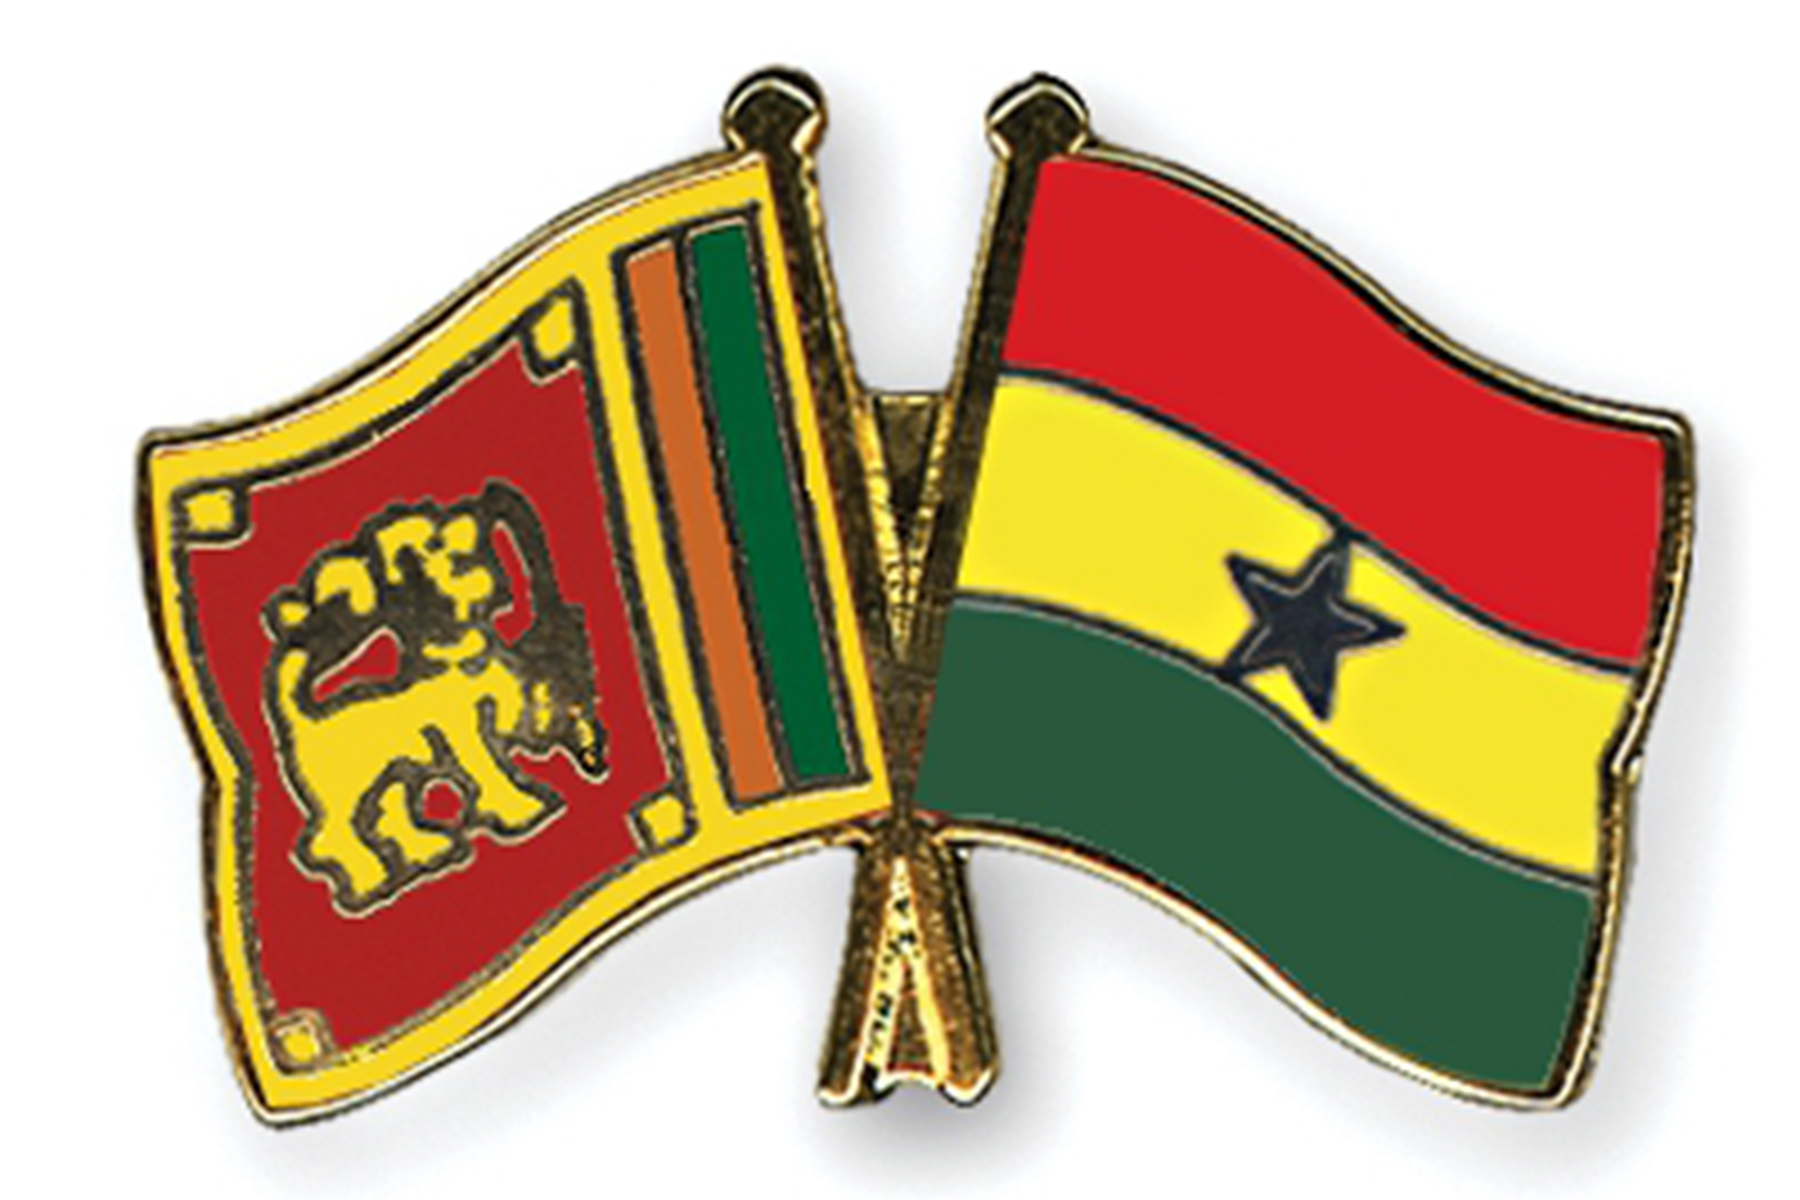 Sri Lanka shares sorrow for the loss of lives in Ghana